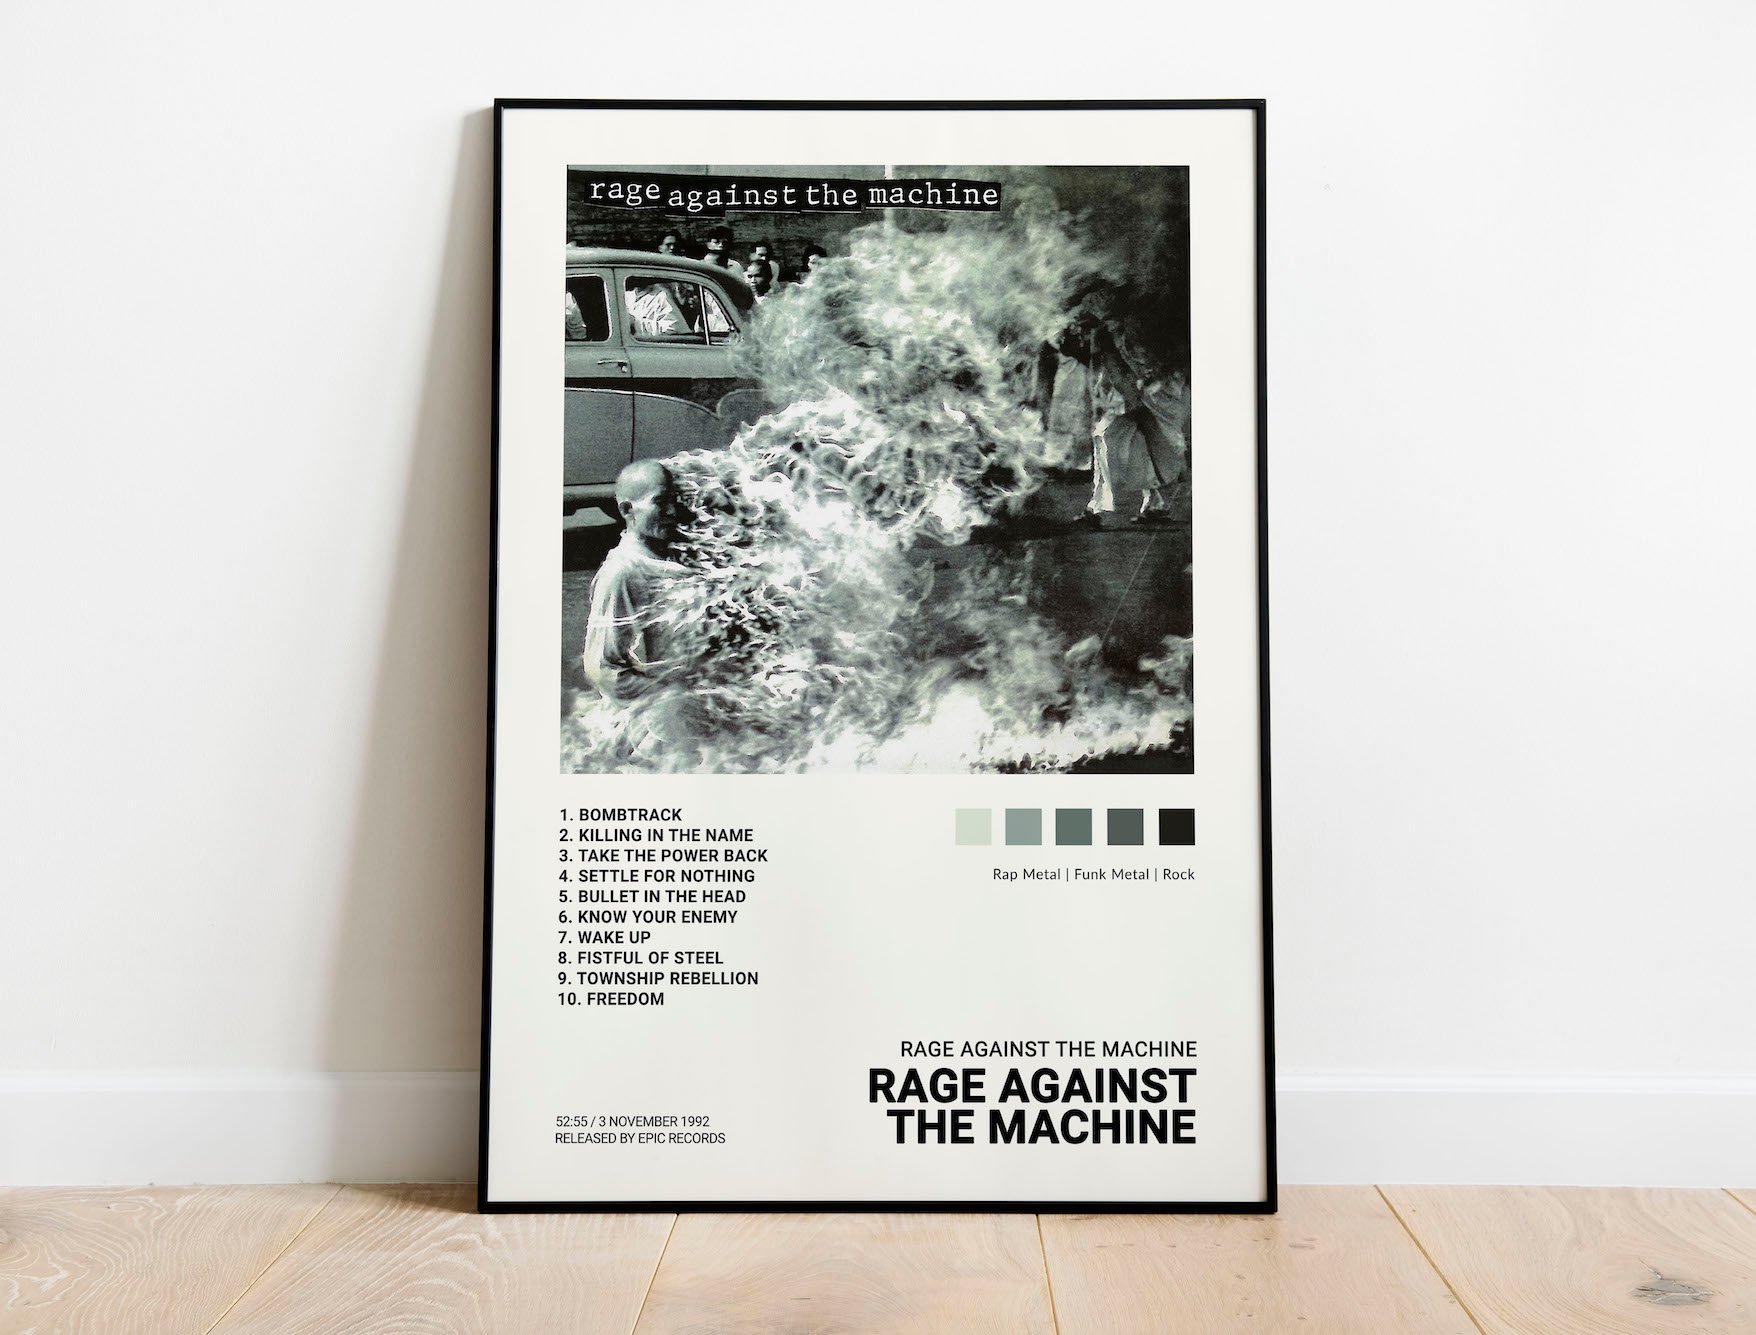 Rage Against the Machine's debut album turns 30